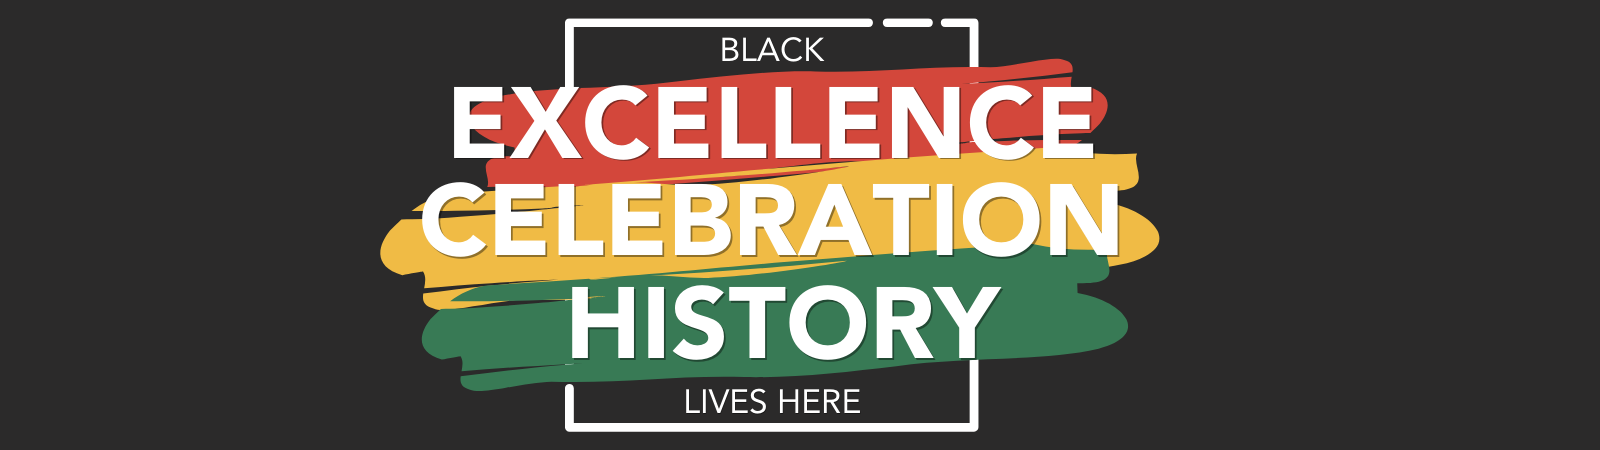 Black Excellence Celebration History Lives here